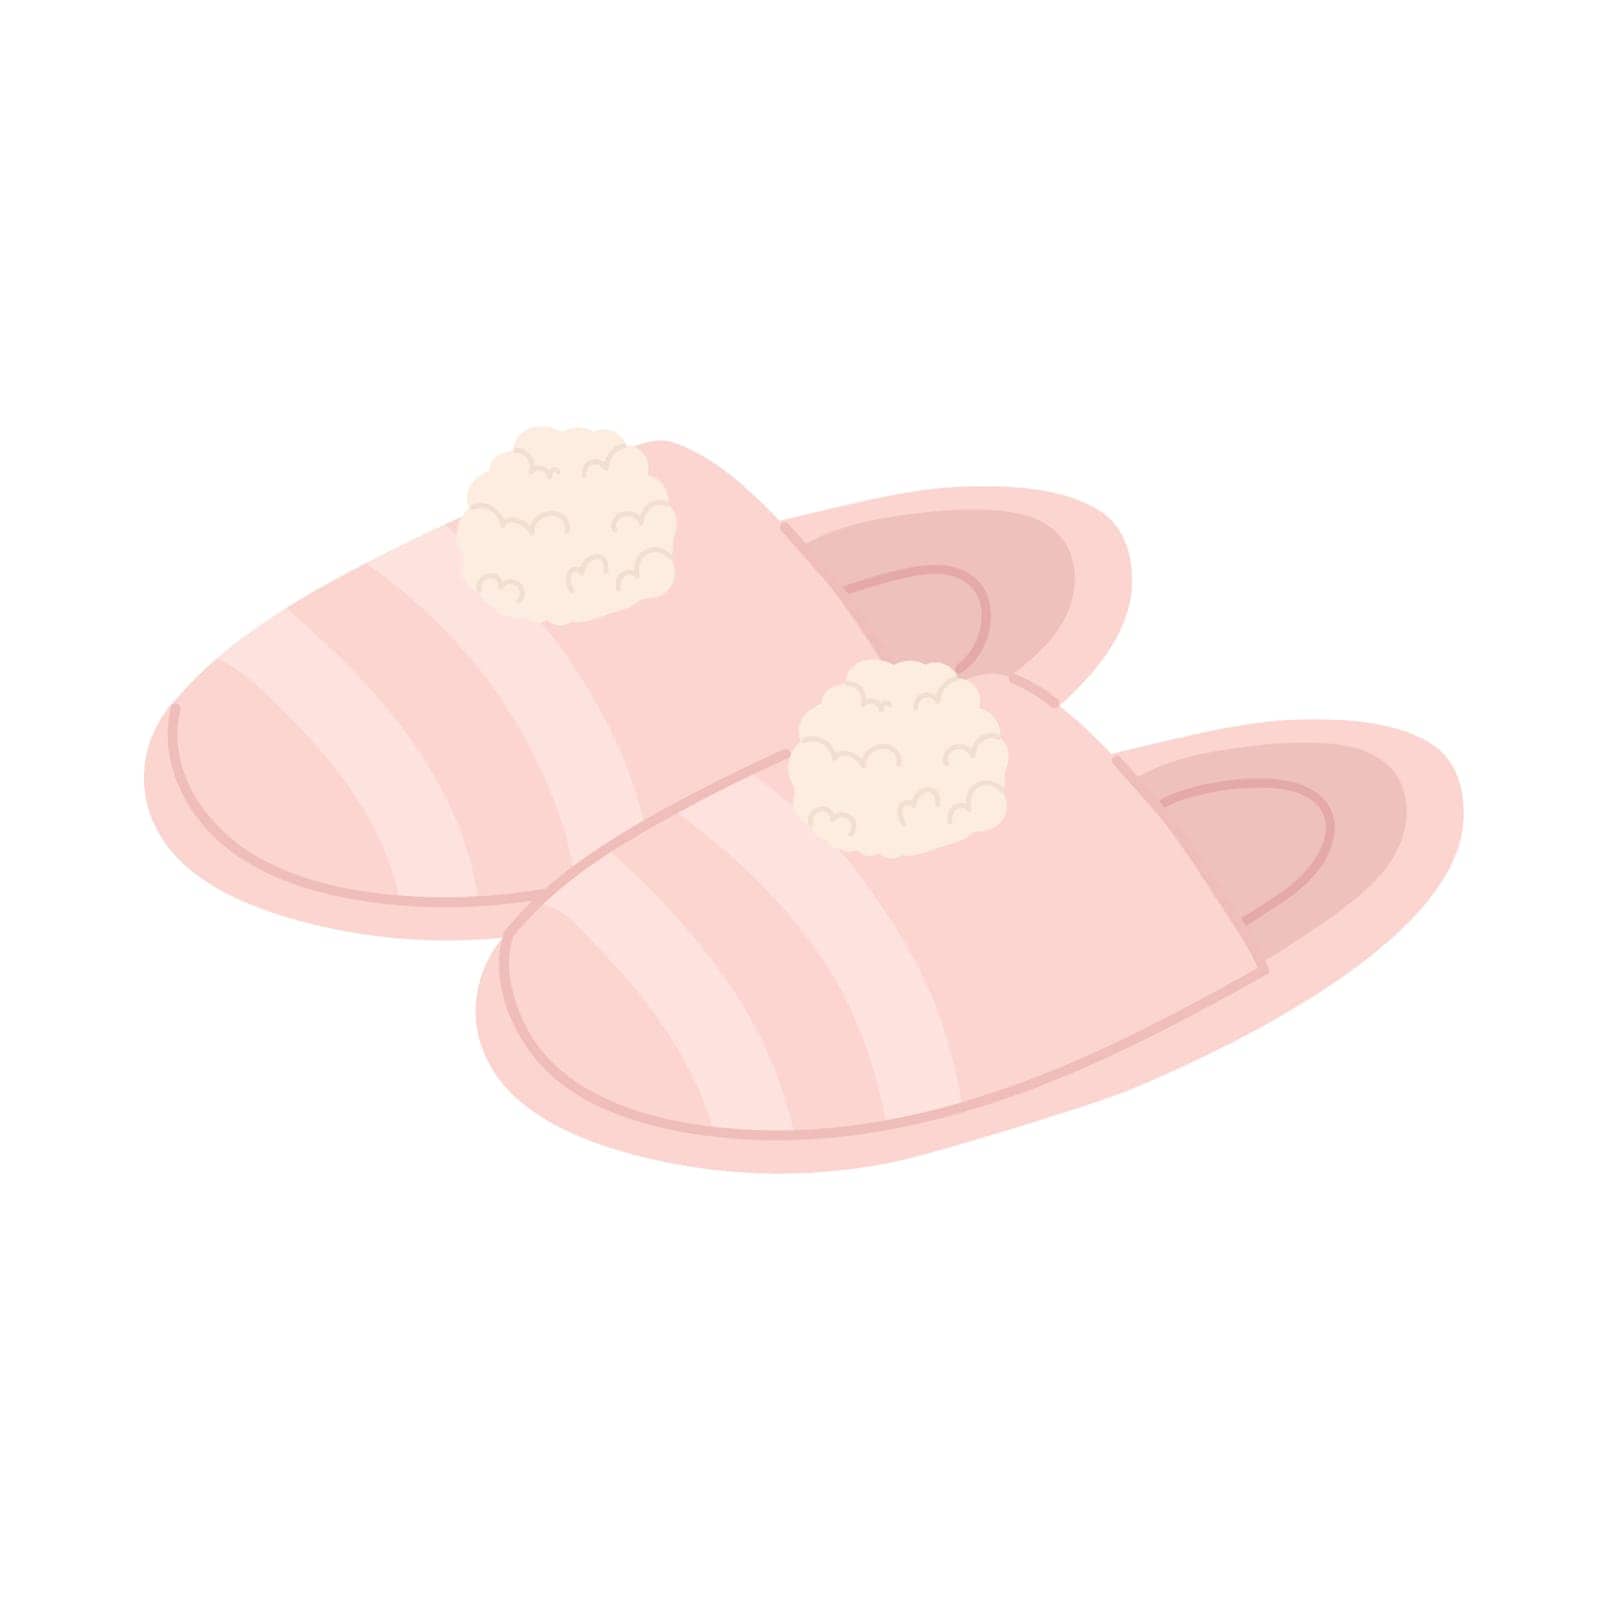 Soft house slippers by Popov